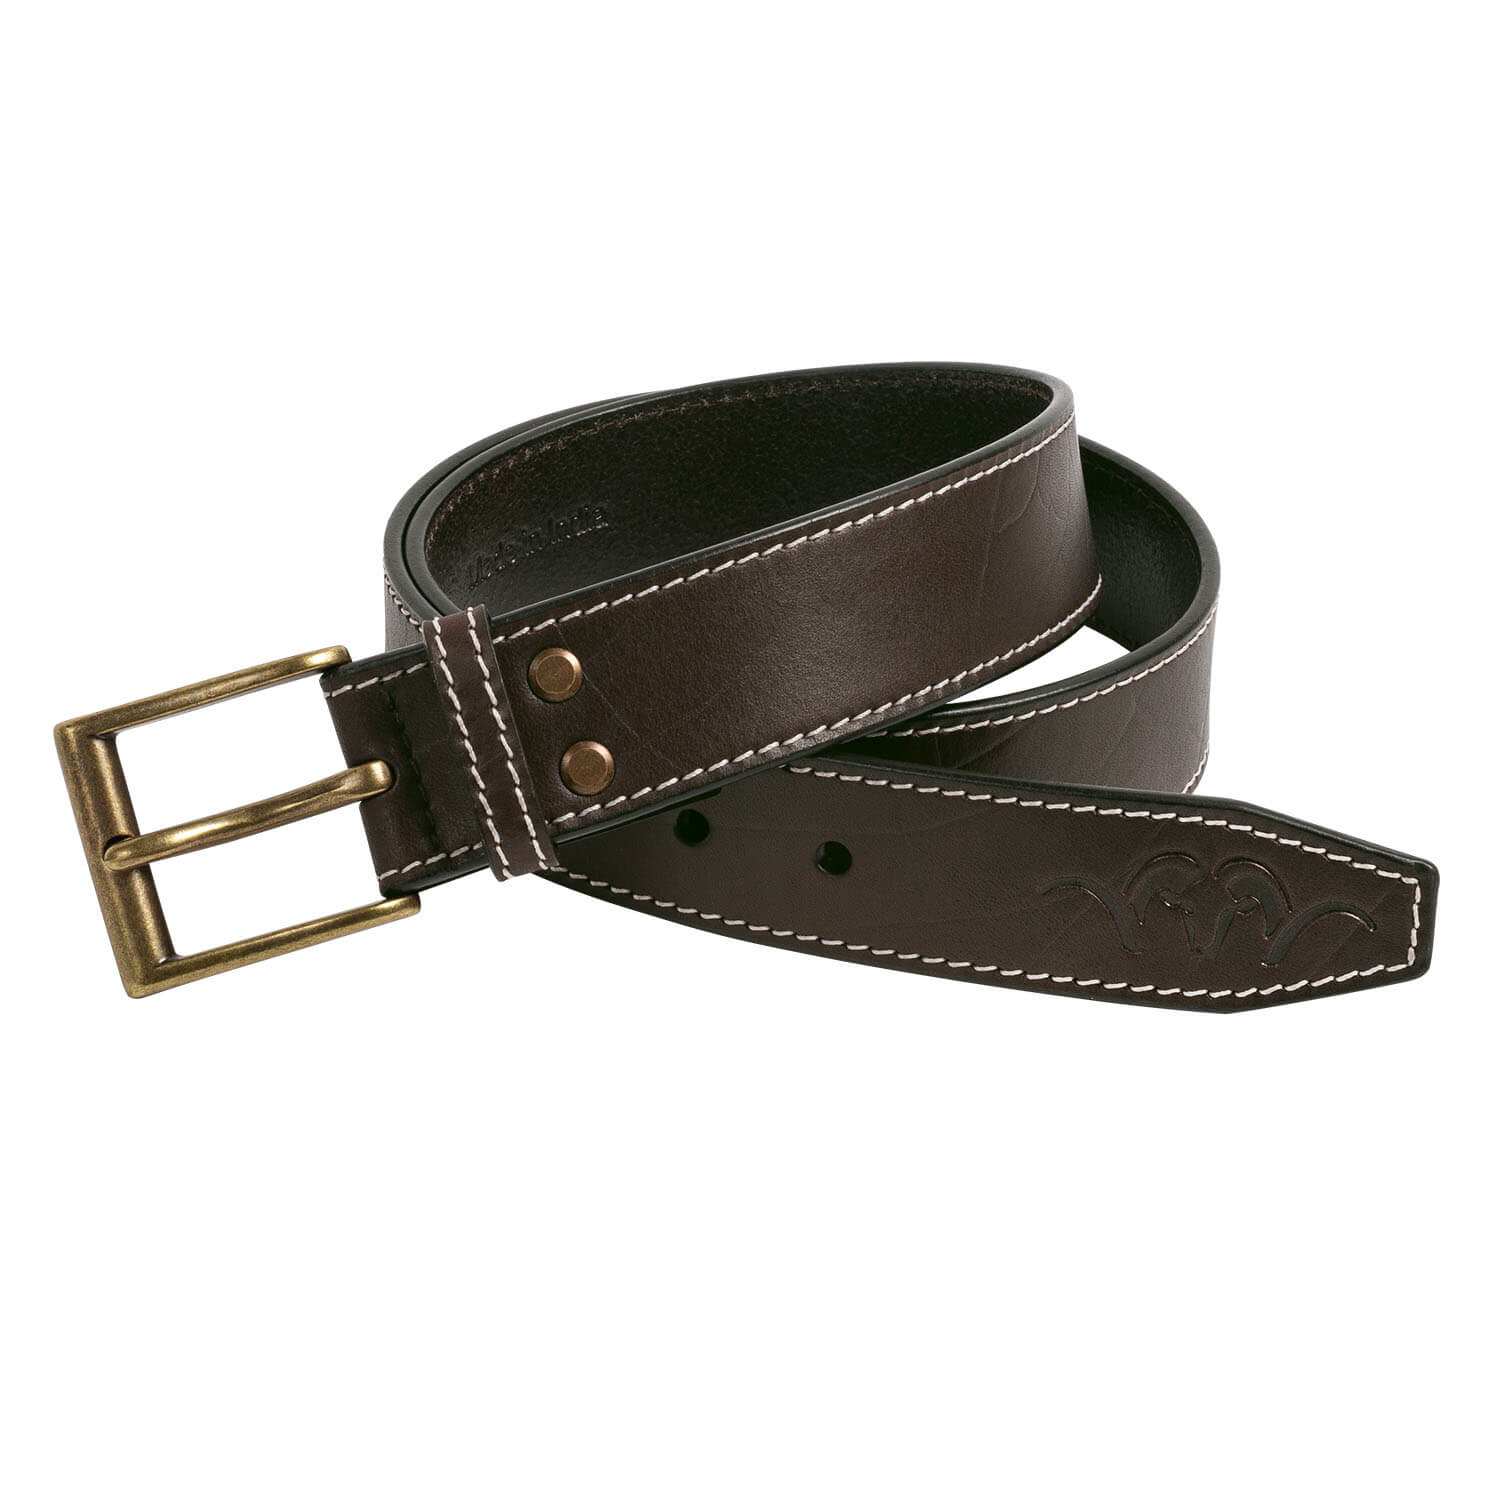 Blaser Belt 221 (toffee) - Belts & Suspenders